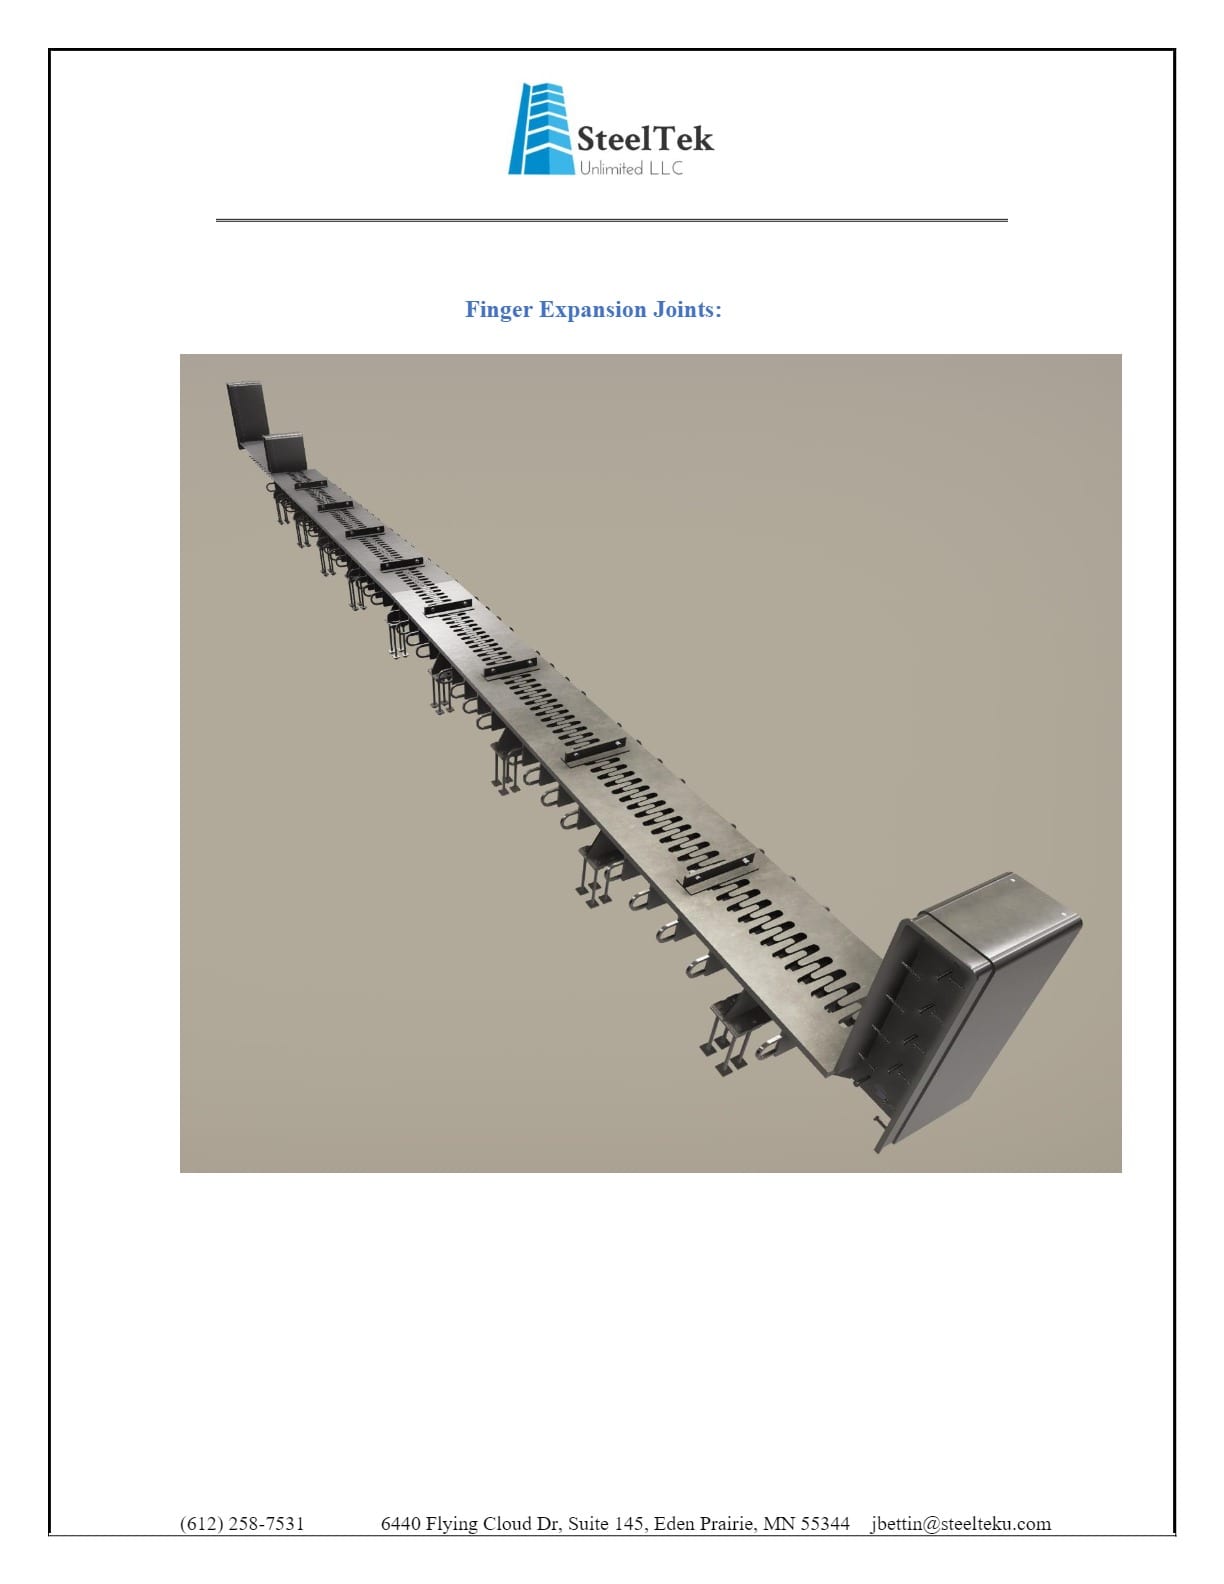 Steel Tek Unlimited 2021 AISC Brochure — Finger Expansion Joints